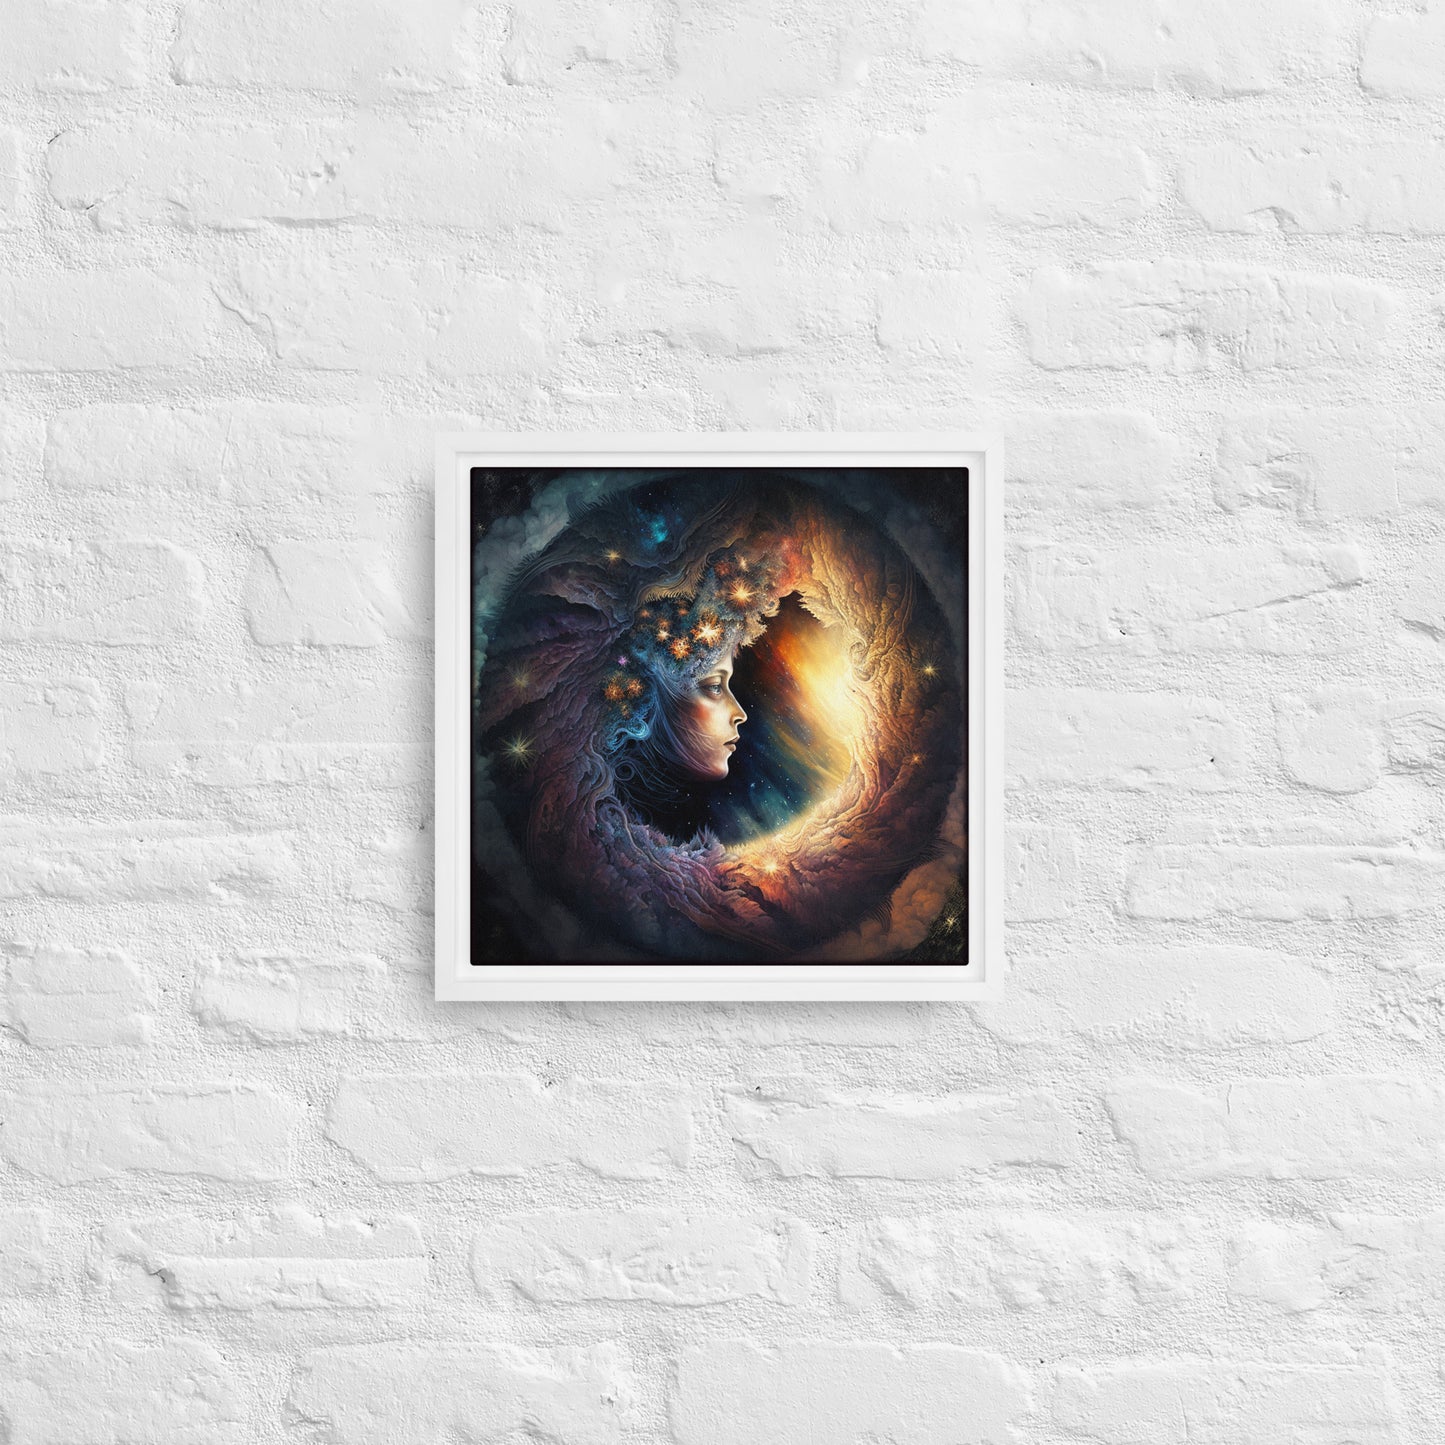 Celestial Goddess "Stellara" Framed canvas